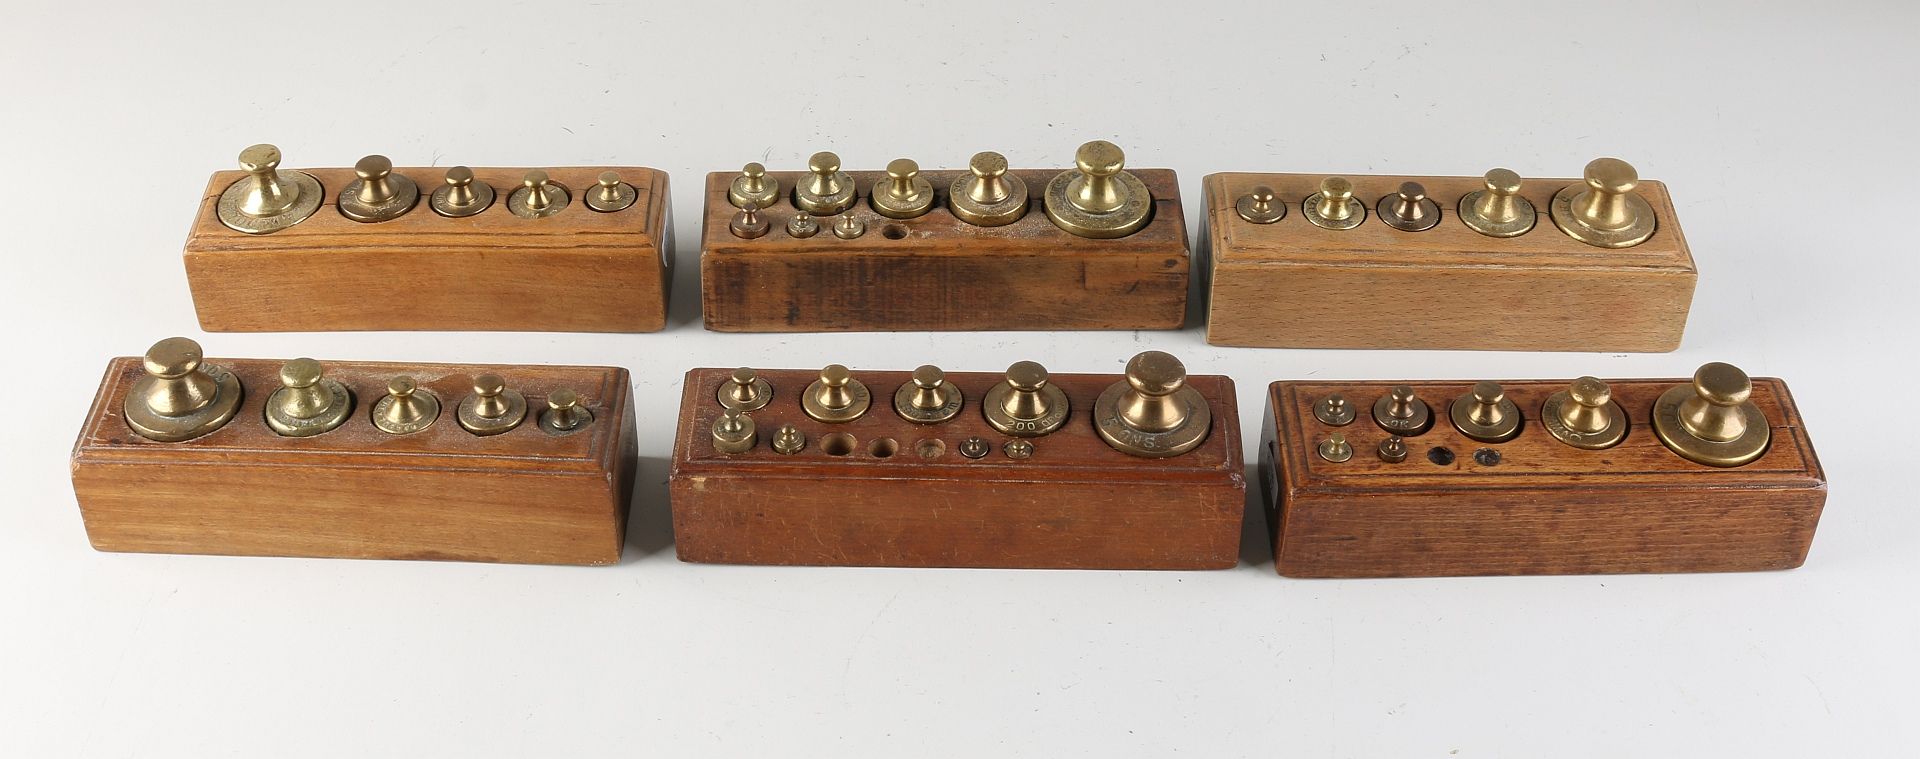 Six antique weight blocks, 1900